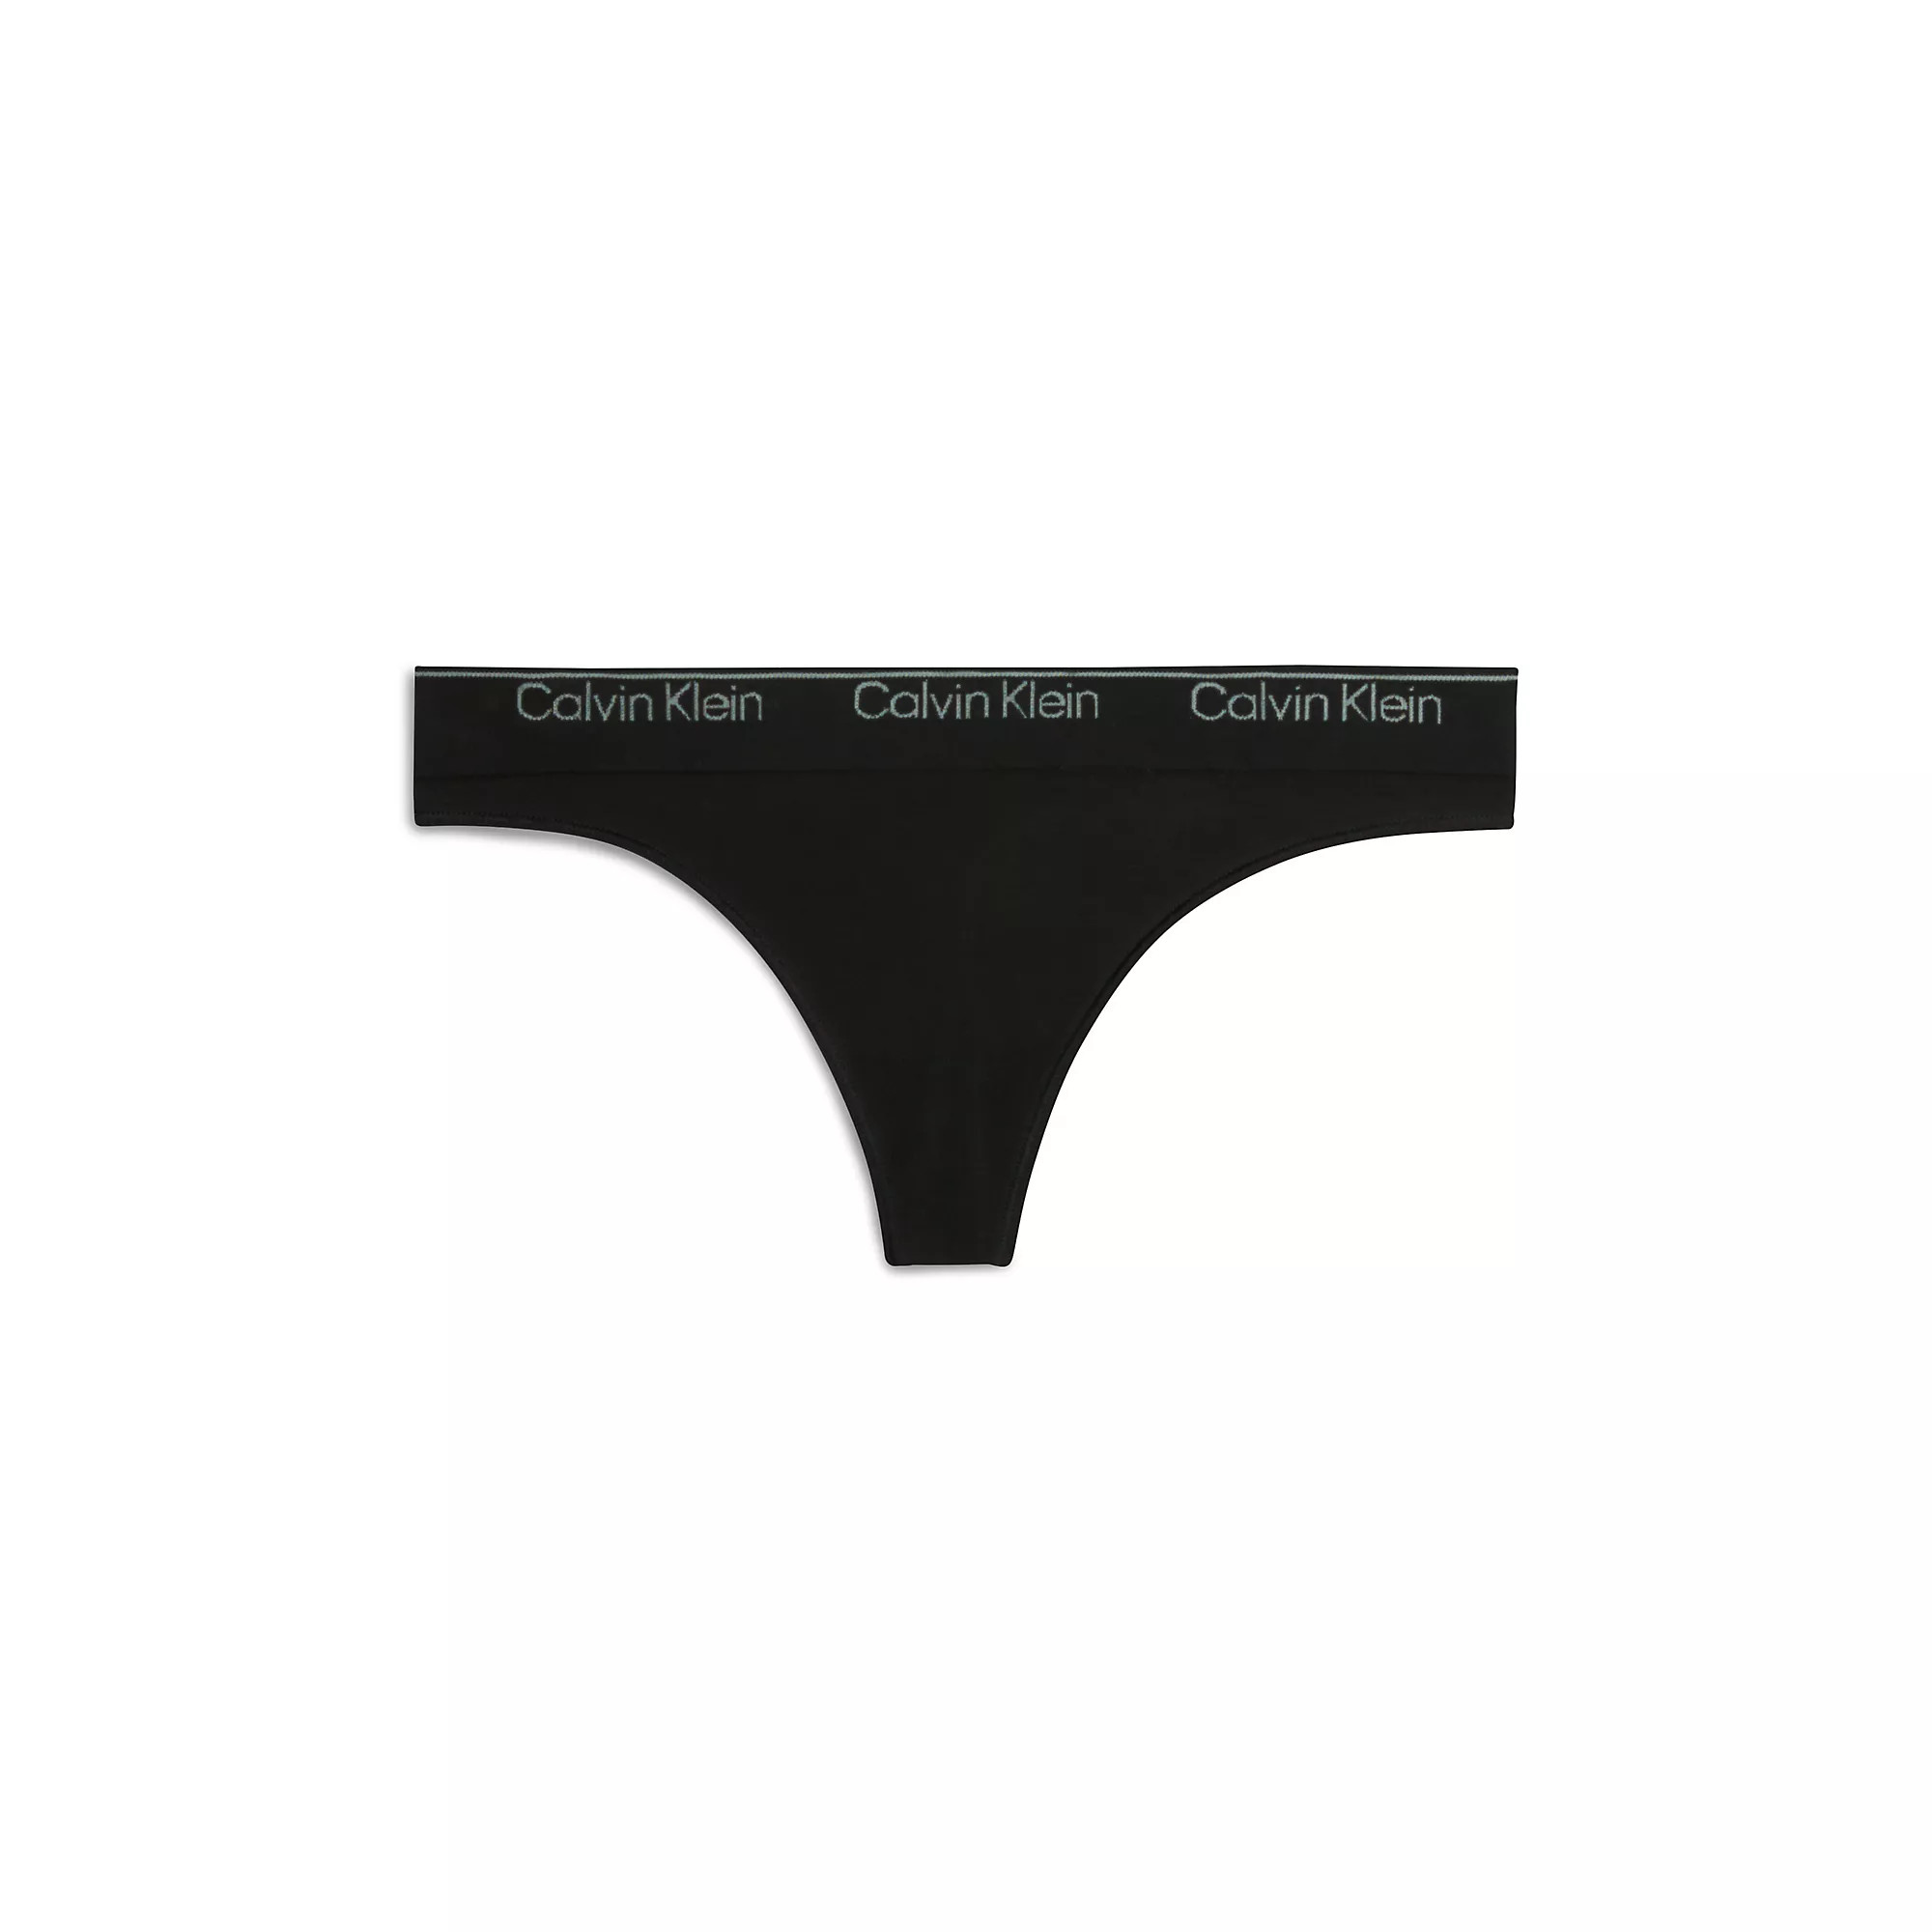 Spodní prádlo Dámské kalhotky THONG 000QF7095EUB1 - Calvin Klein XL